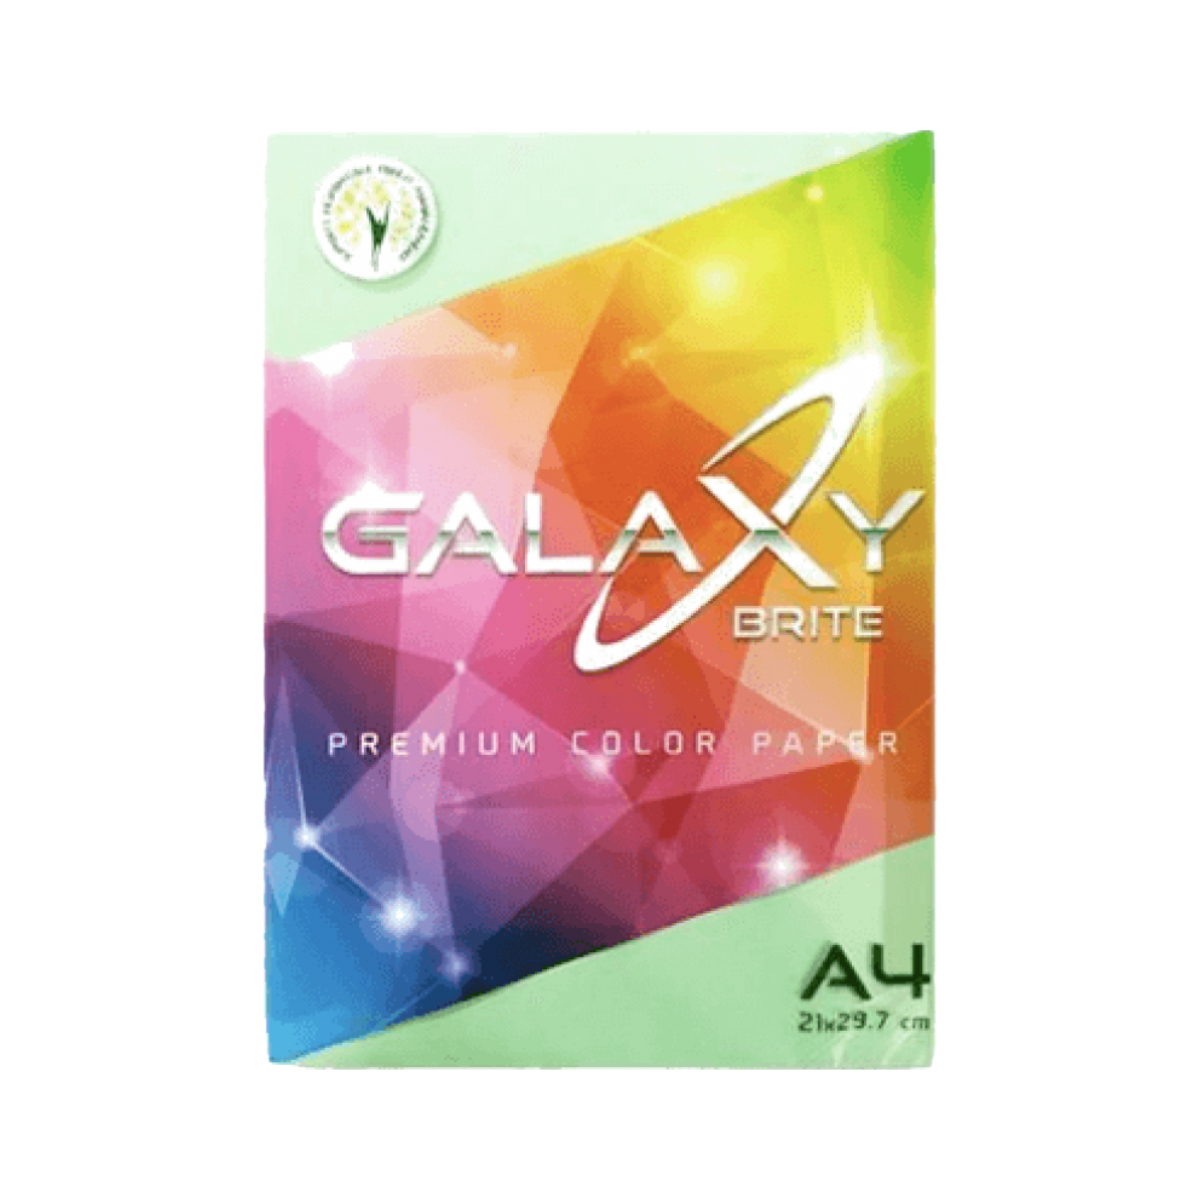 GALAXY BRITE Premium Color Paper A4, 80gsm, 500sheets/ream, Green